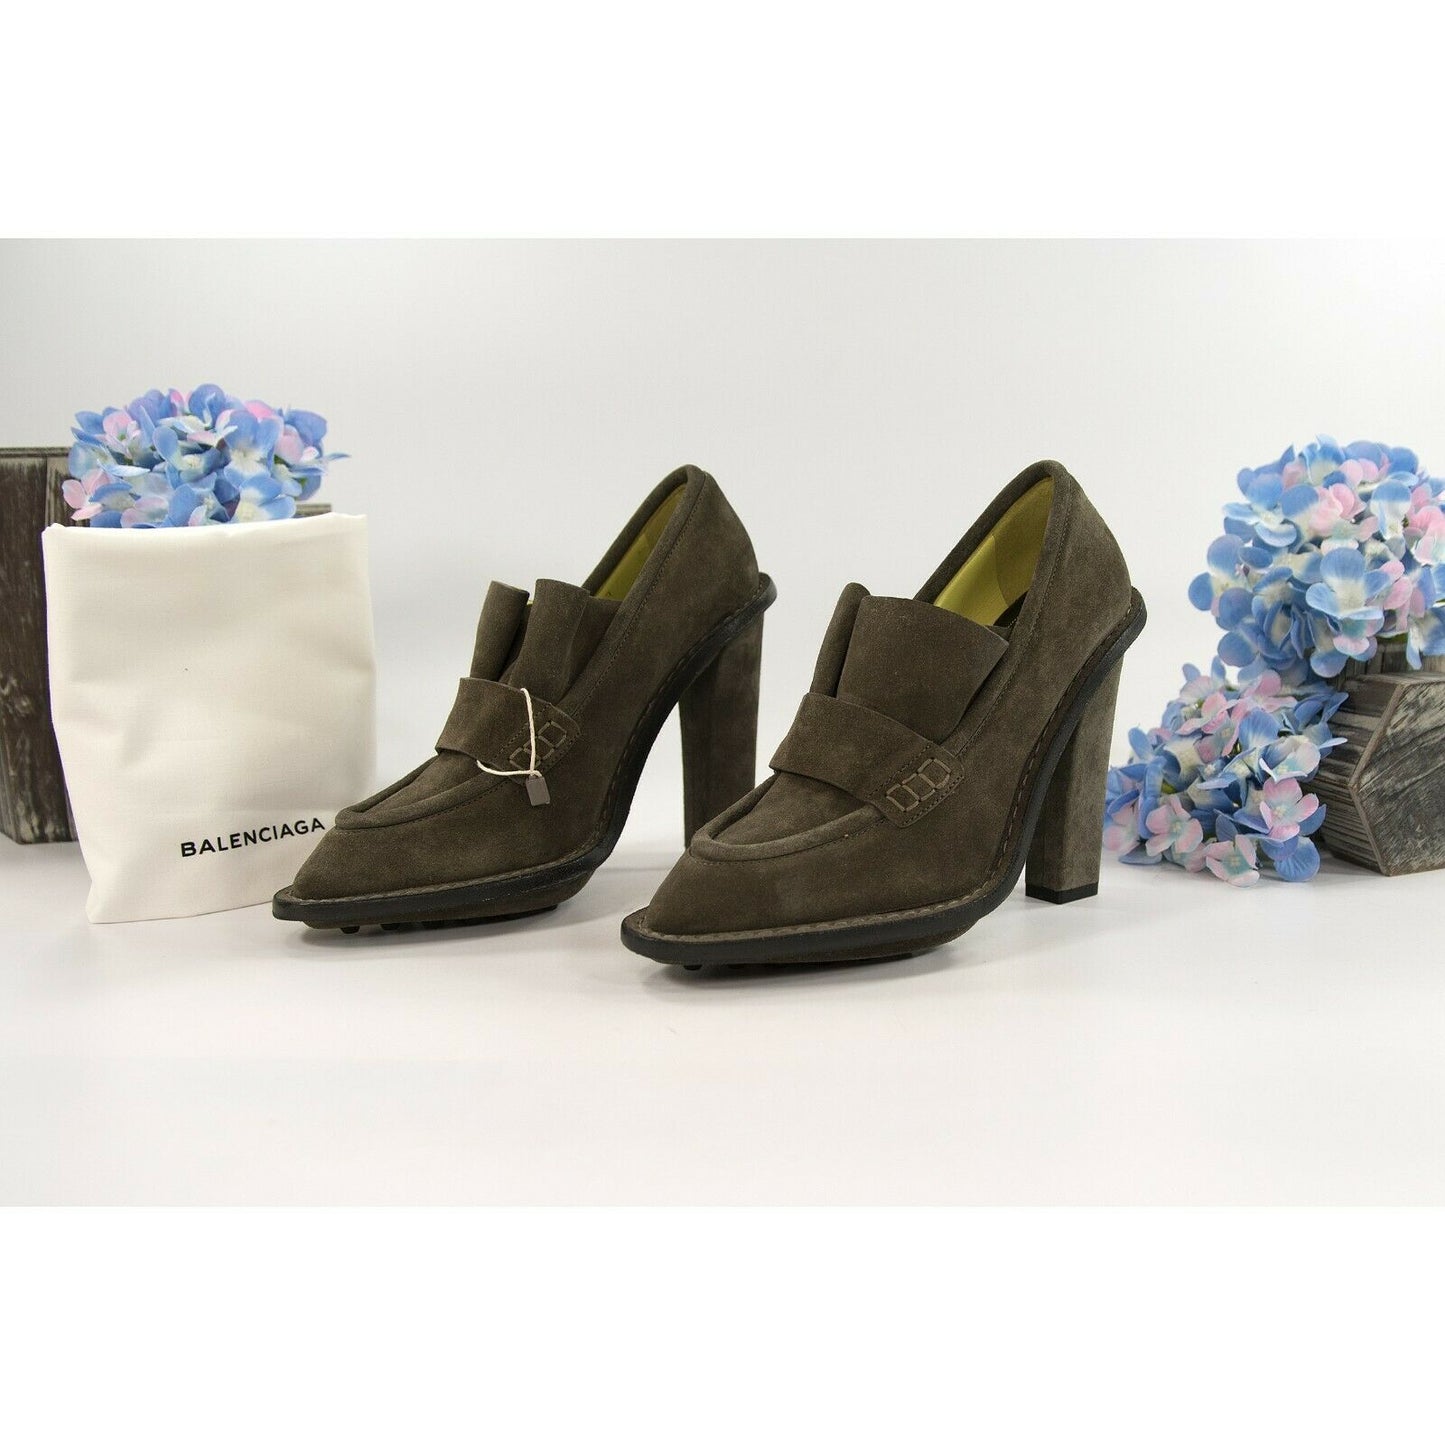 Balenciaga Cendre Suede Moccasin Loafer High Heels Size 37 NIB